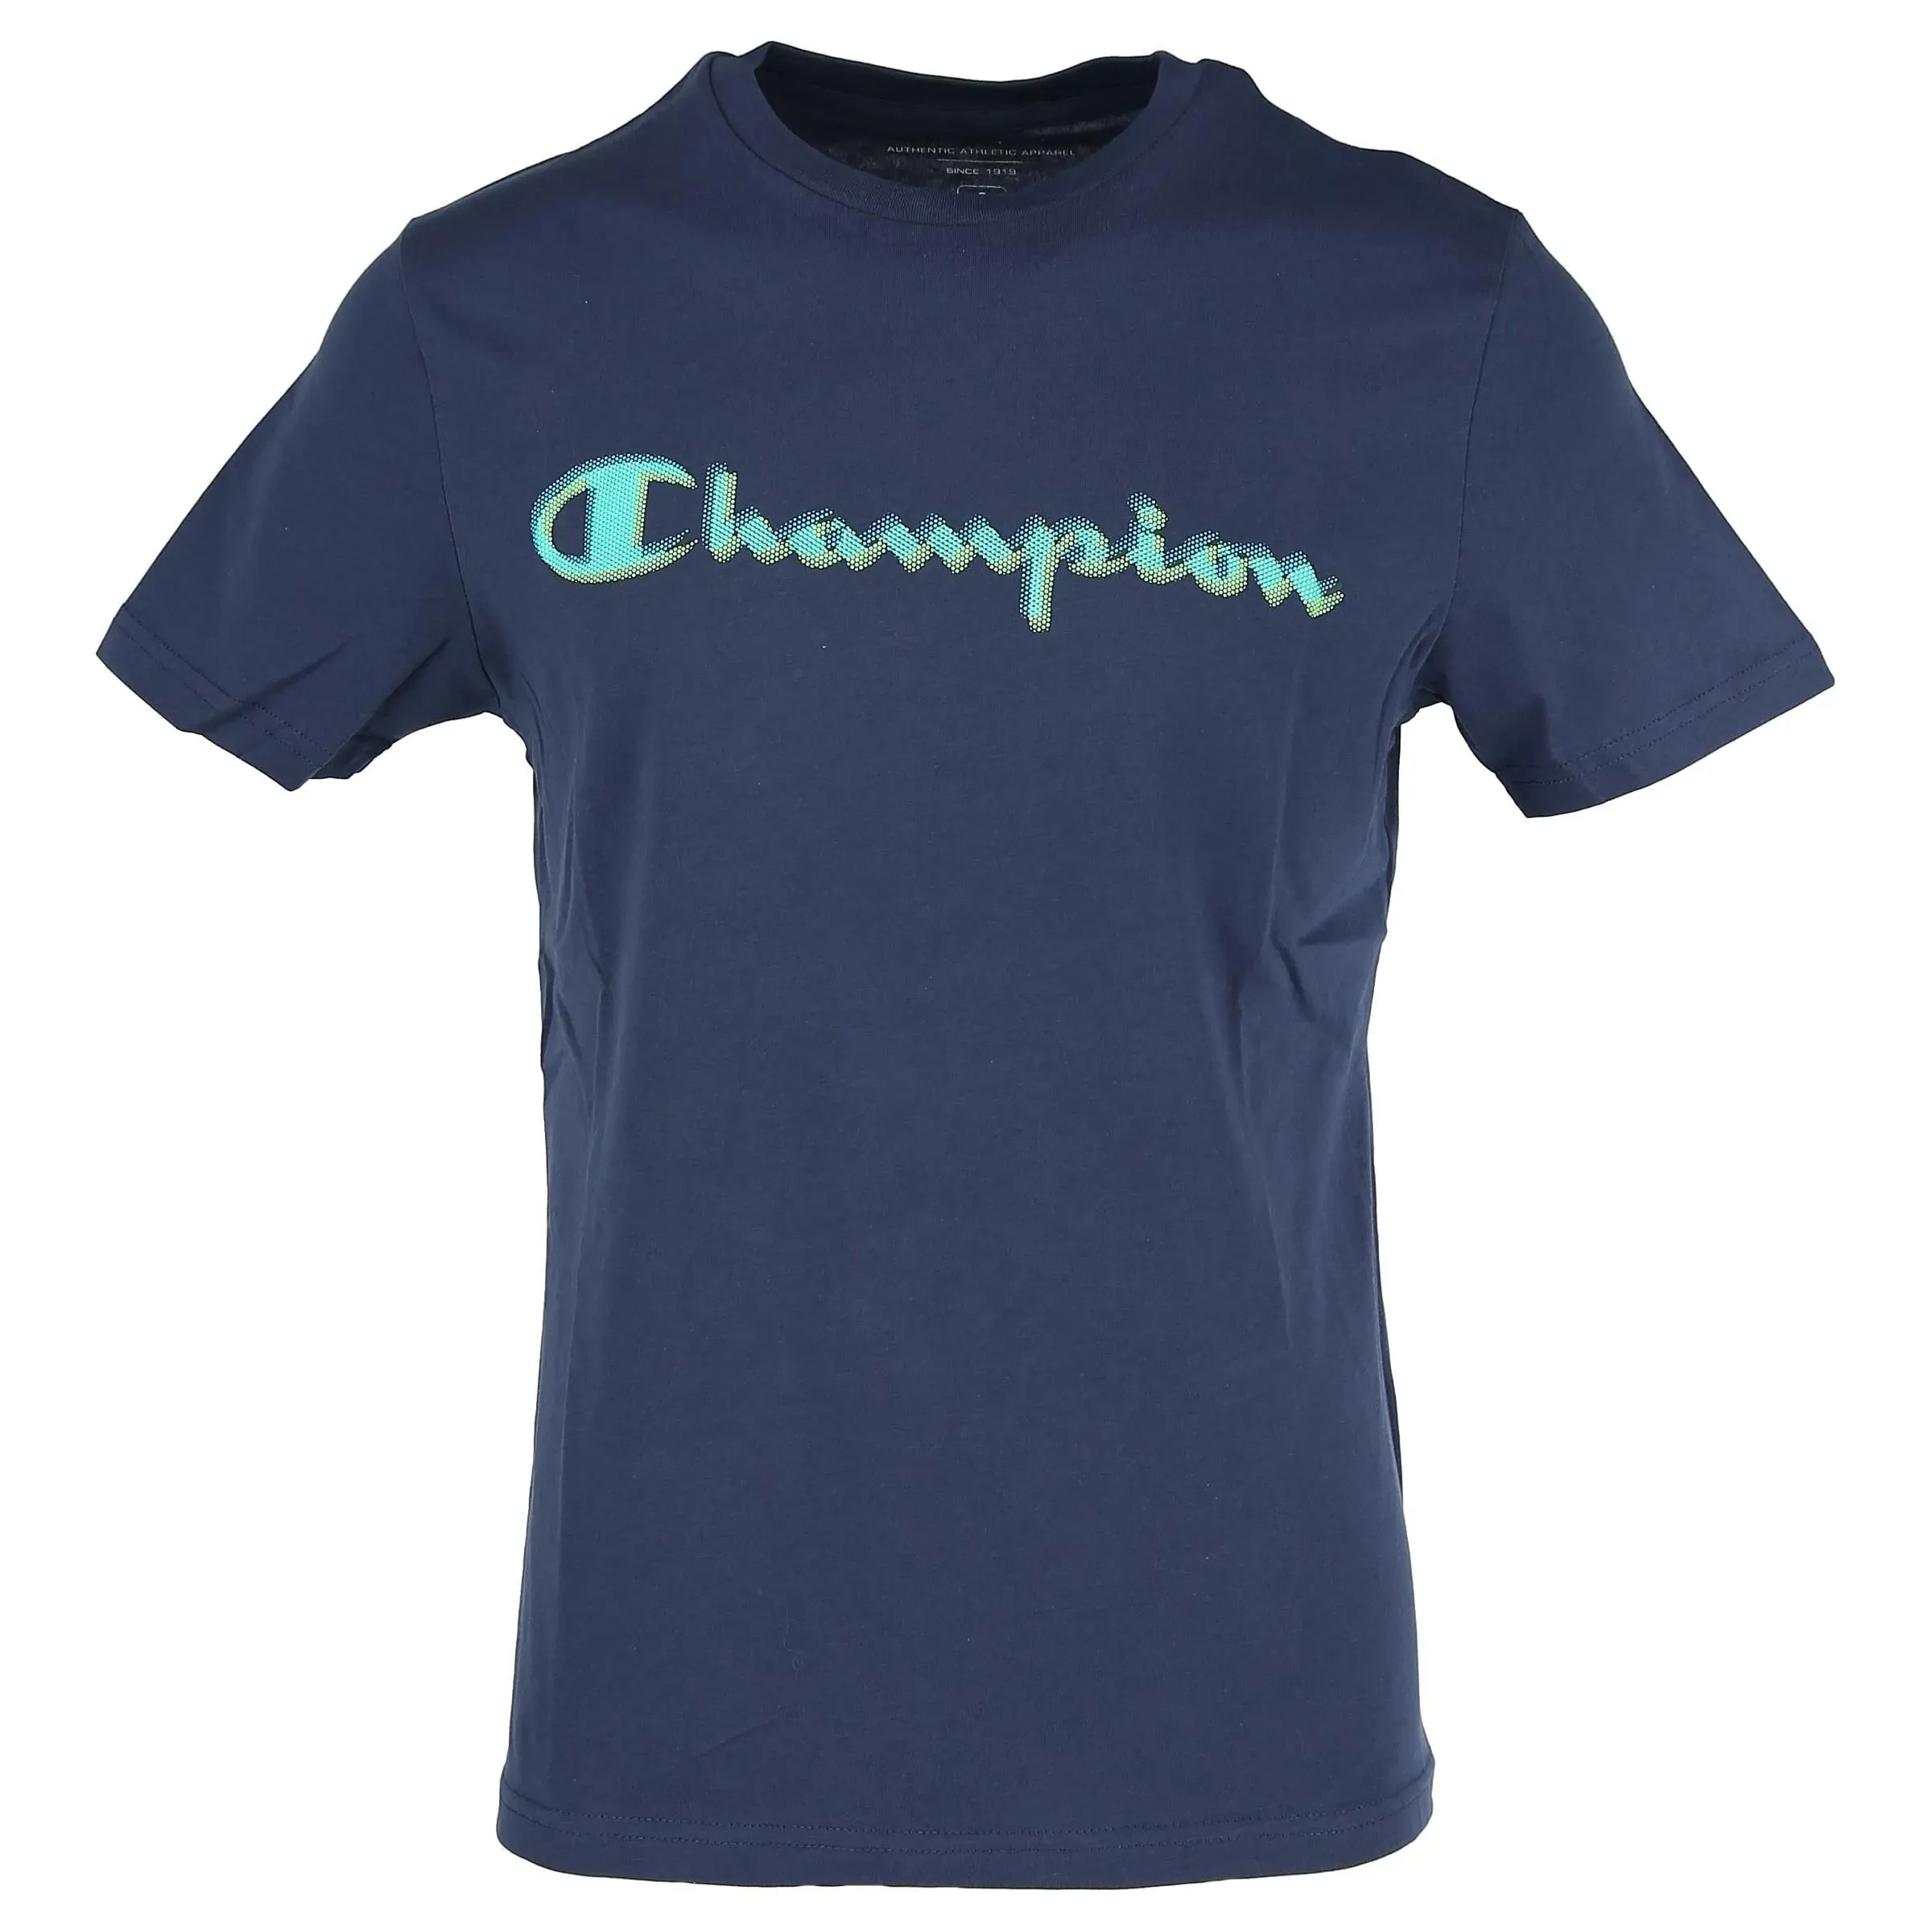 Champion T-shirt LOGO T-SHIRT 